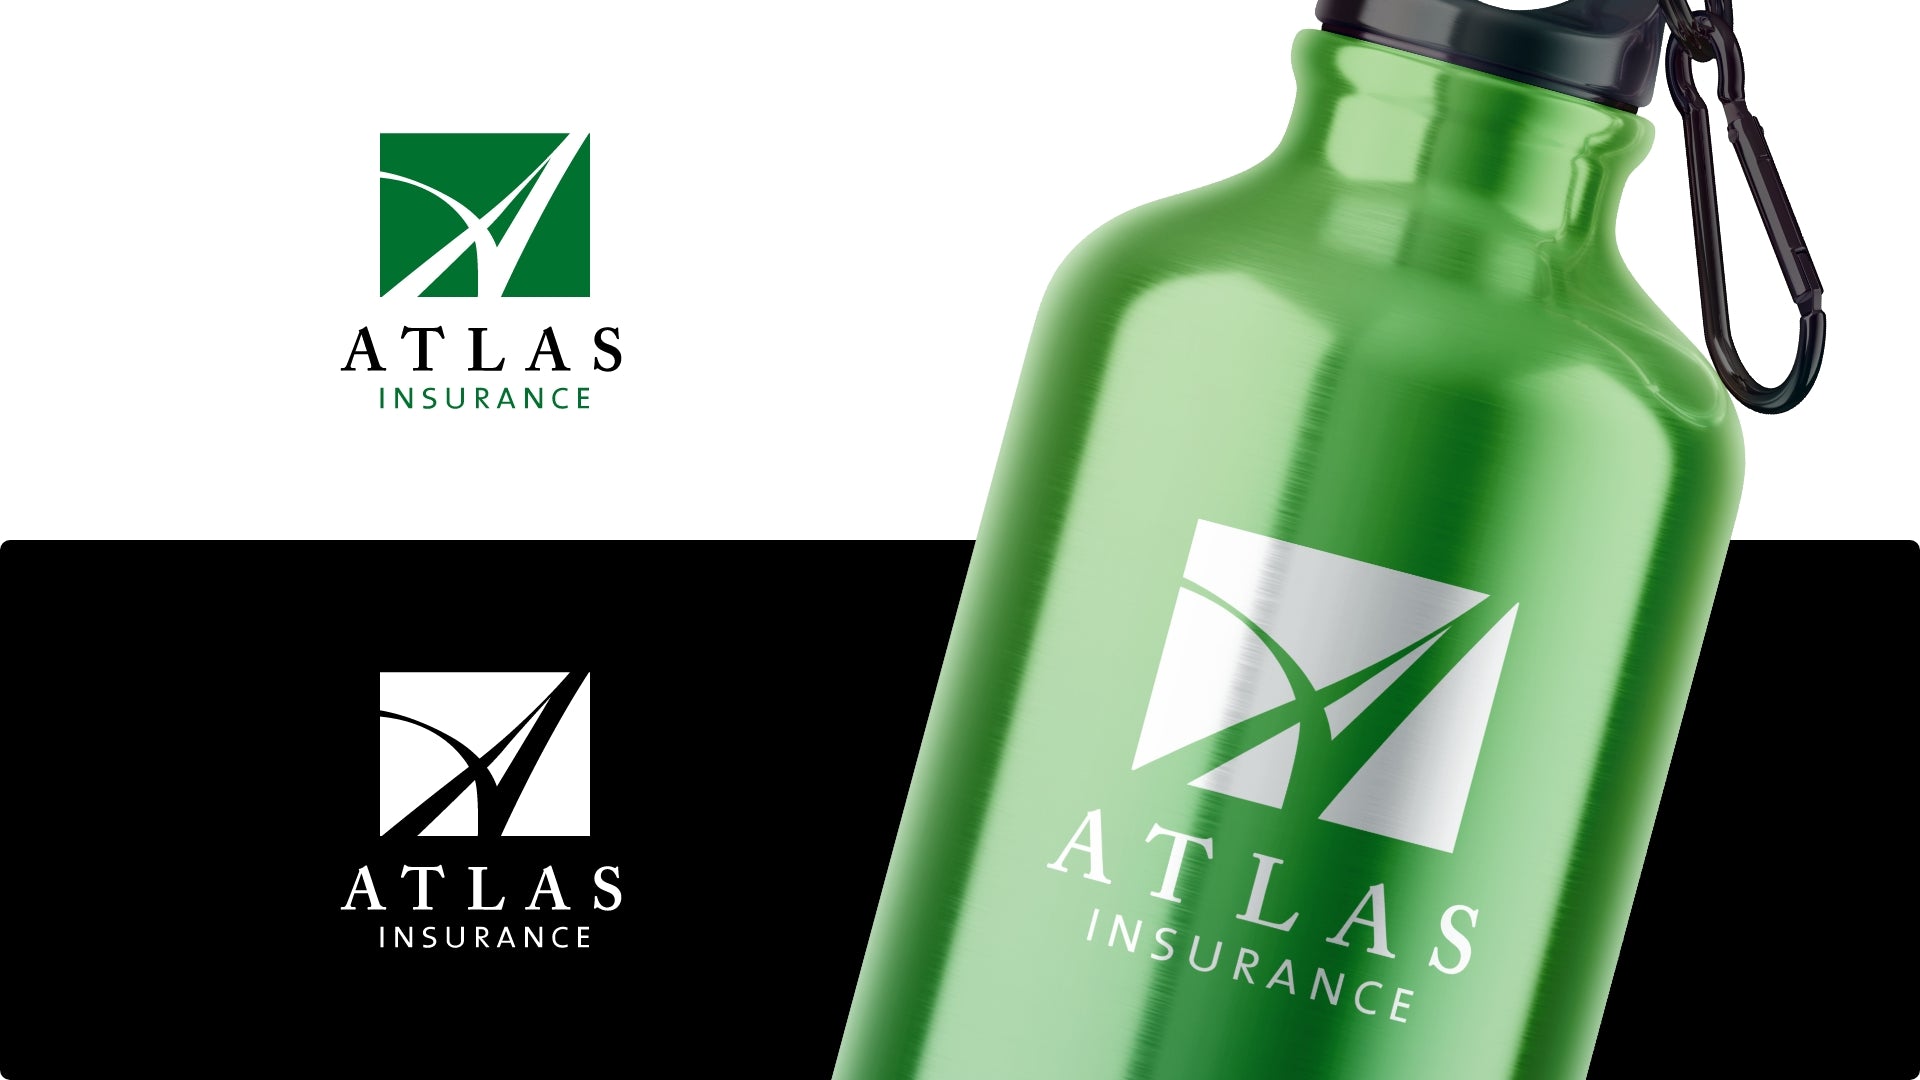 Atlas Insurance Brand Identity Design and Logo Design by Scott Luscombe of Creatibly